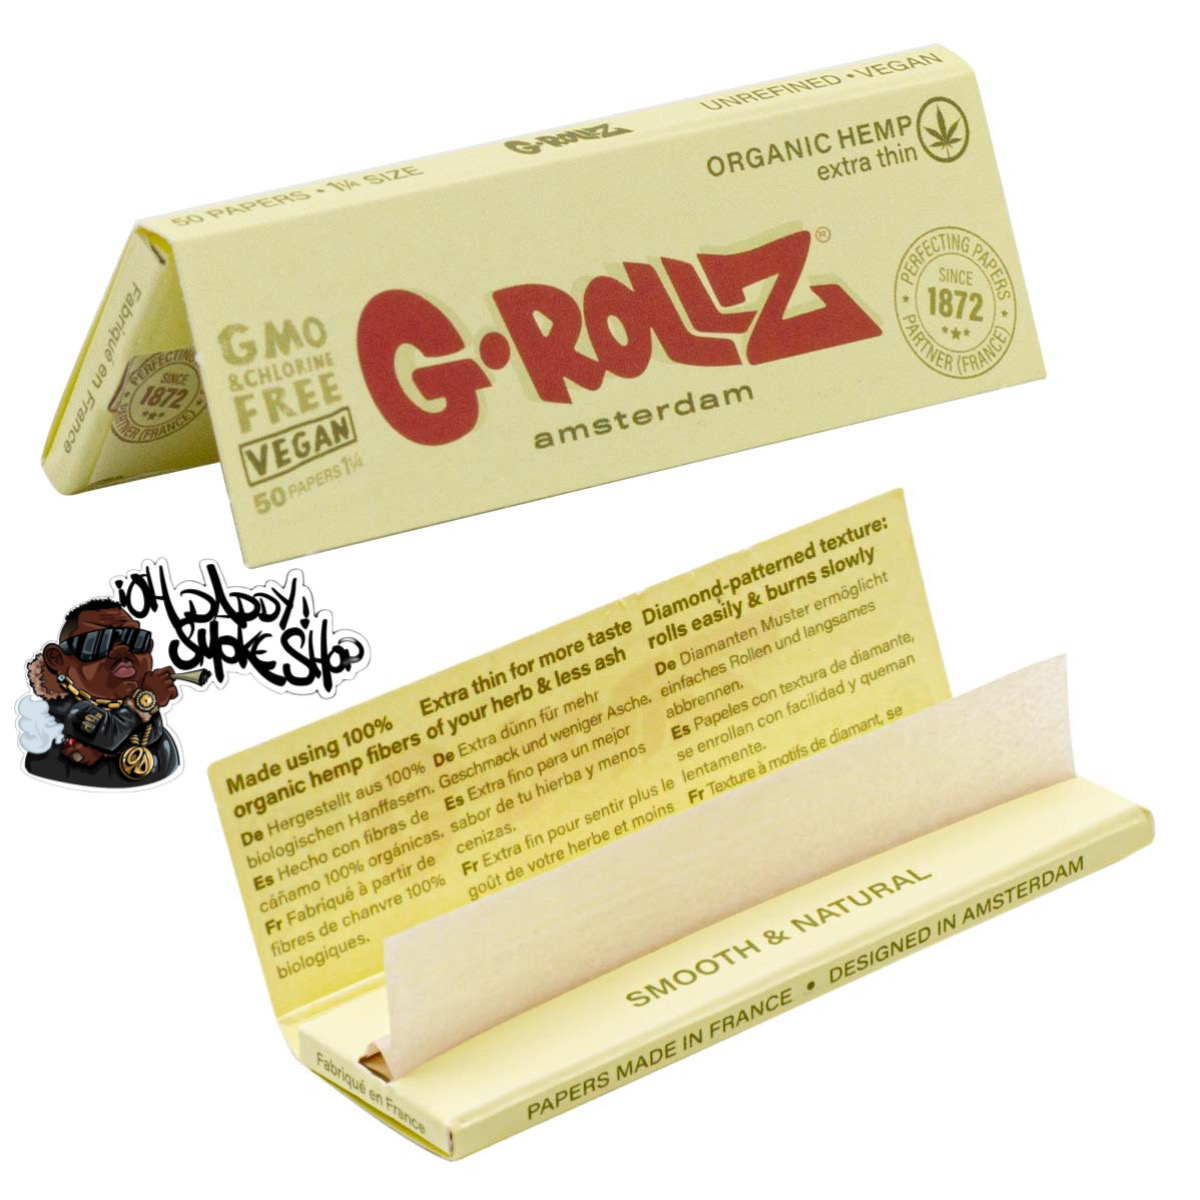 G-Rollz Organic hemp 1 1/4